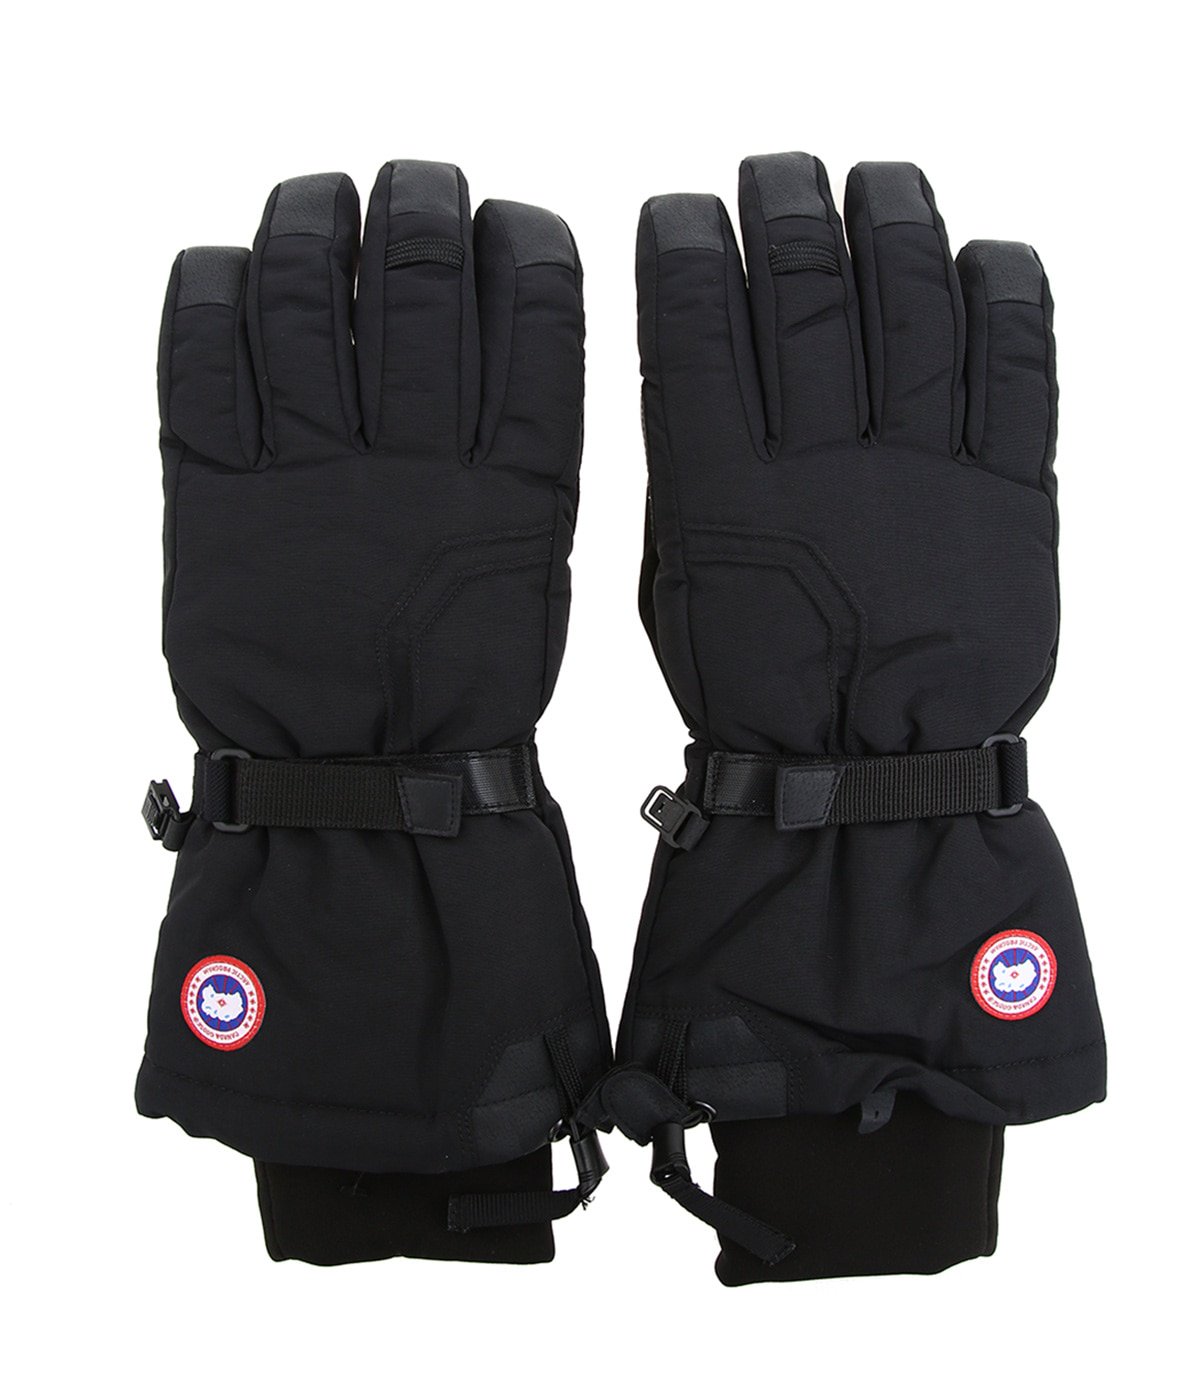 Arctic Gloves | CANADA GOOSE(カナダグース) / ファッション雑貨 手袋